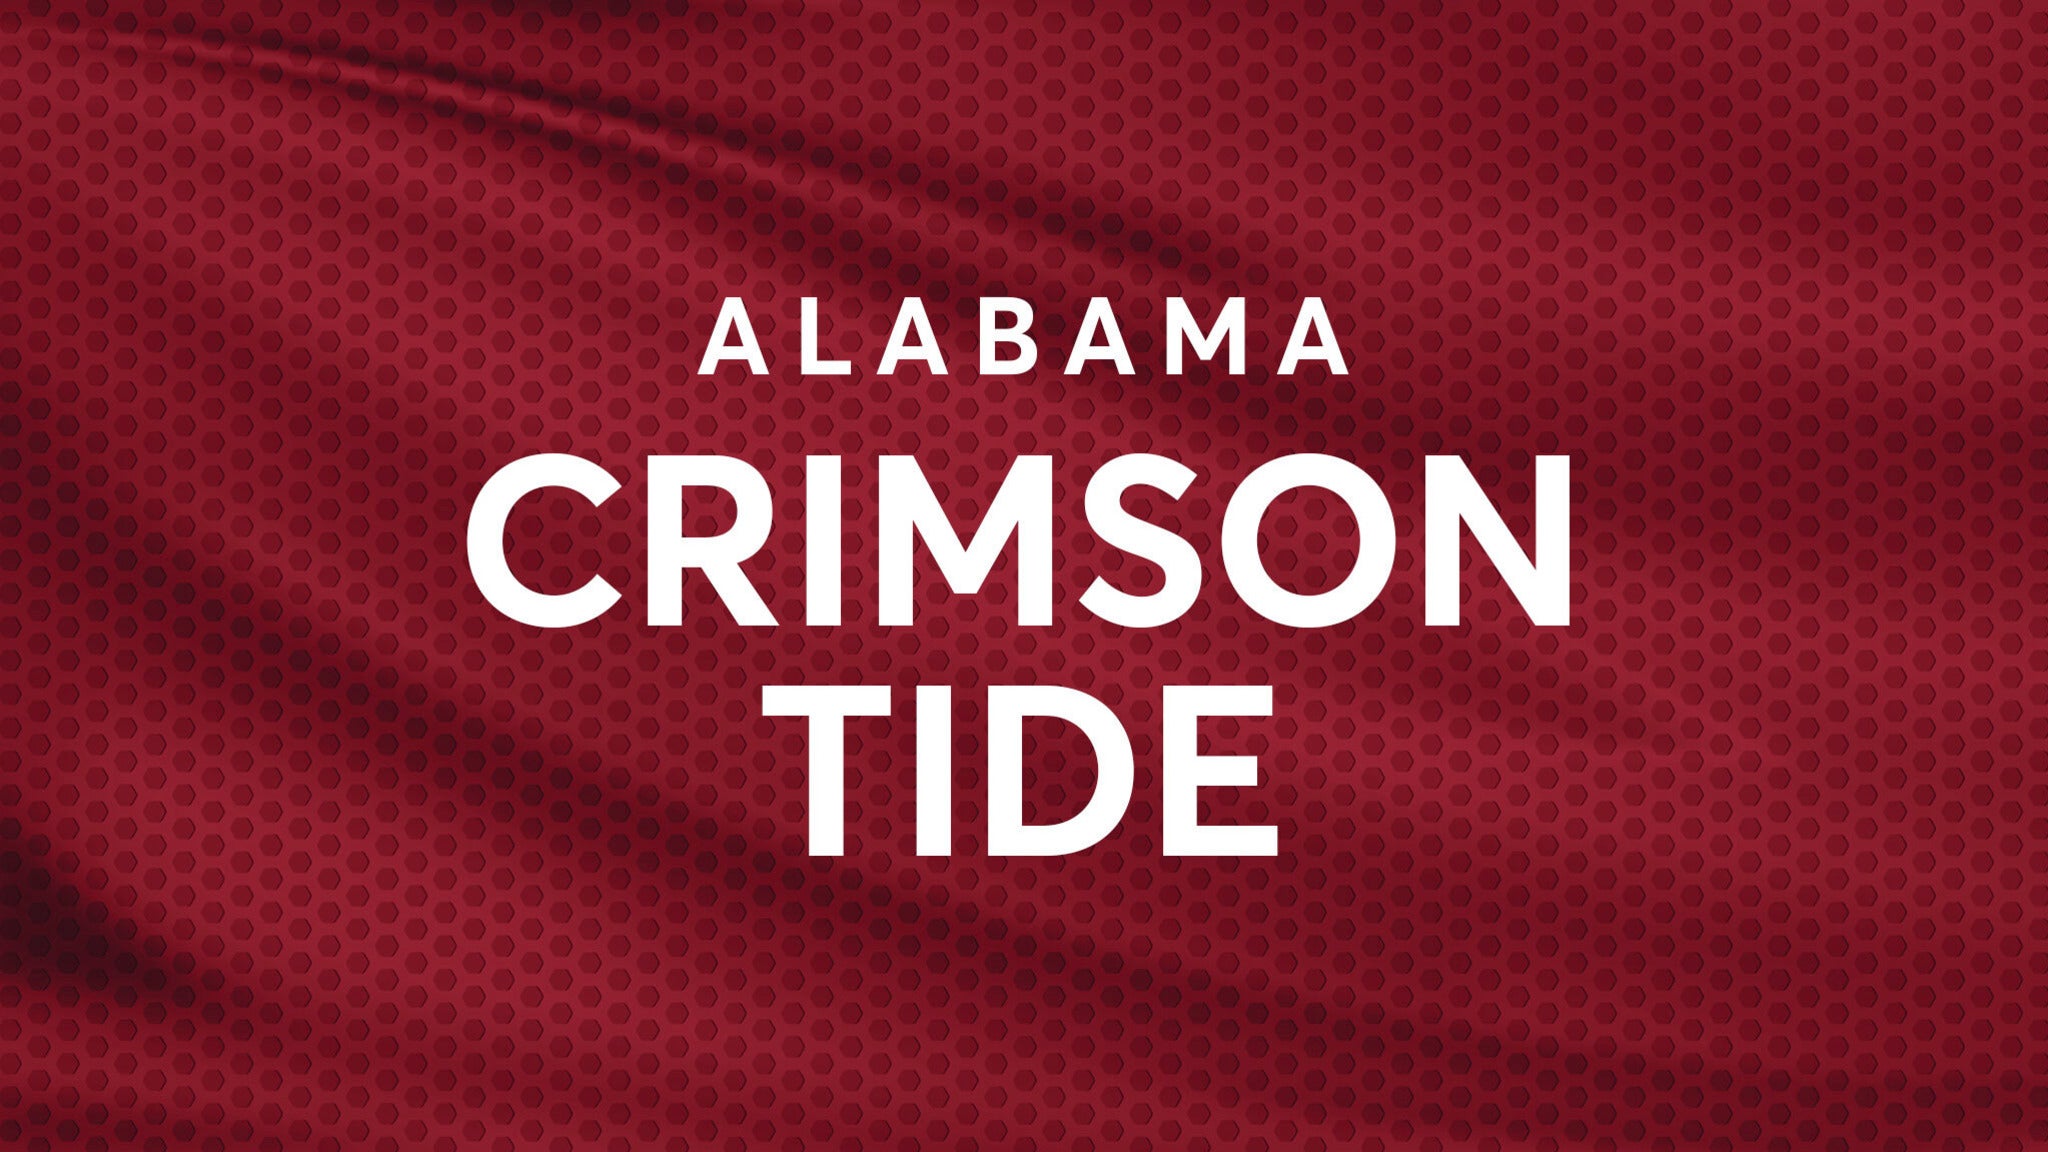 University of Alabama Crimson Tide Volleyball presale information on freepresalepasswords.com